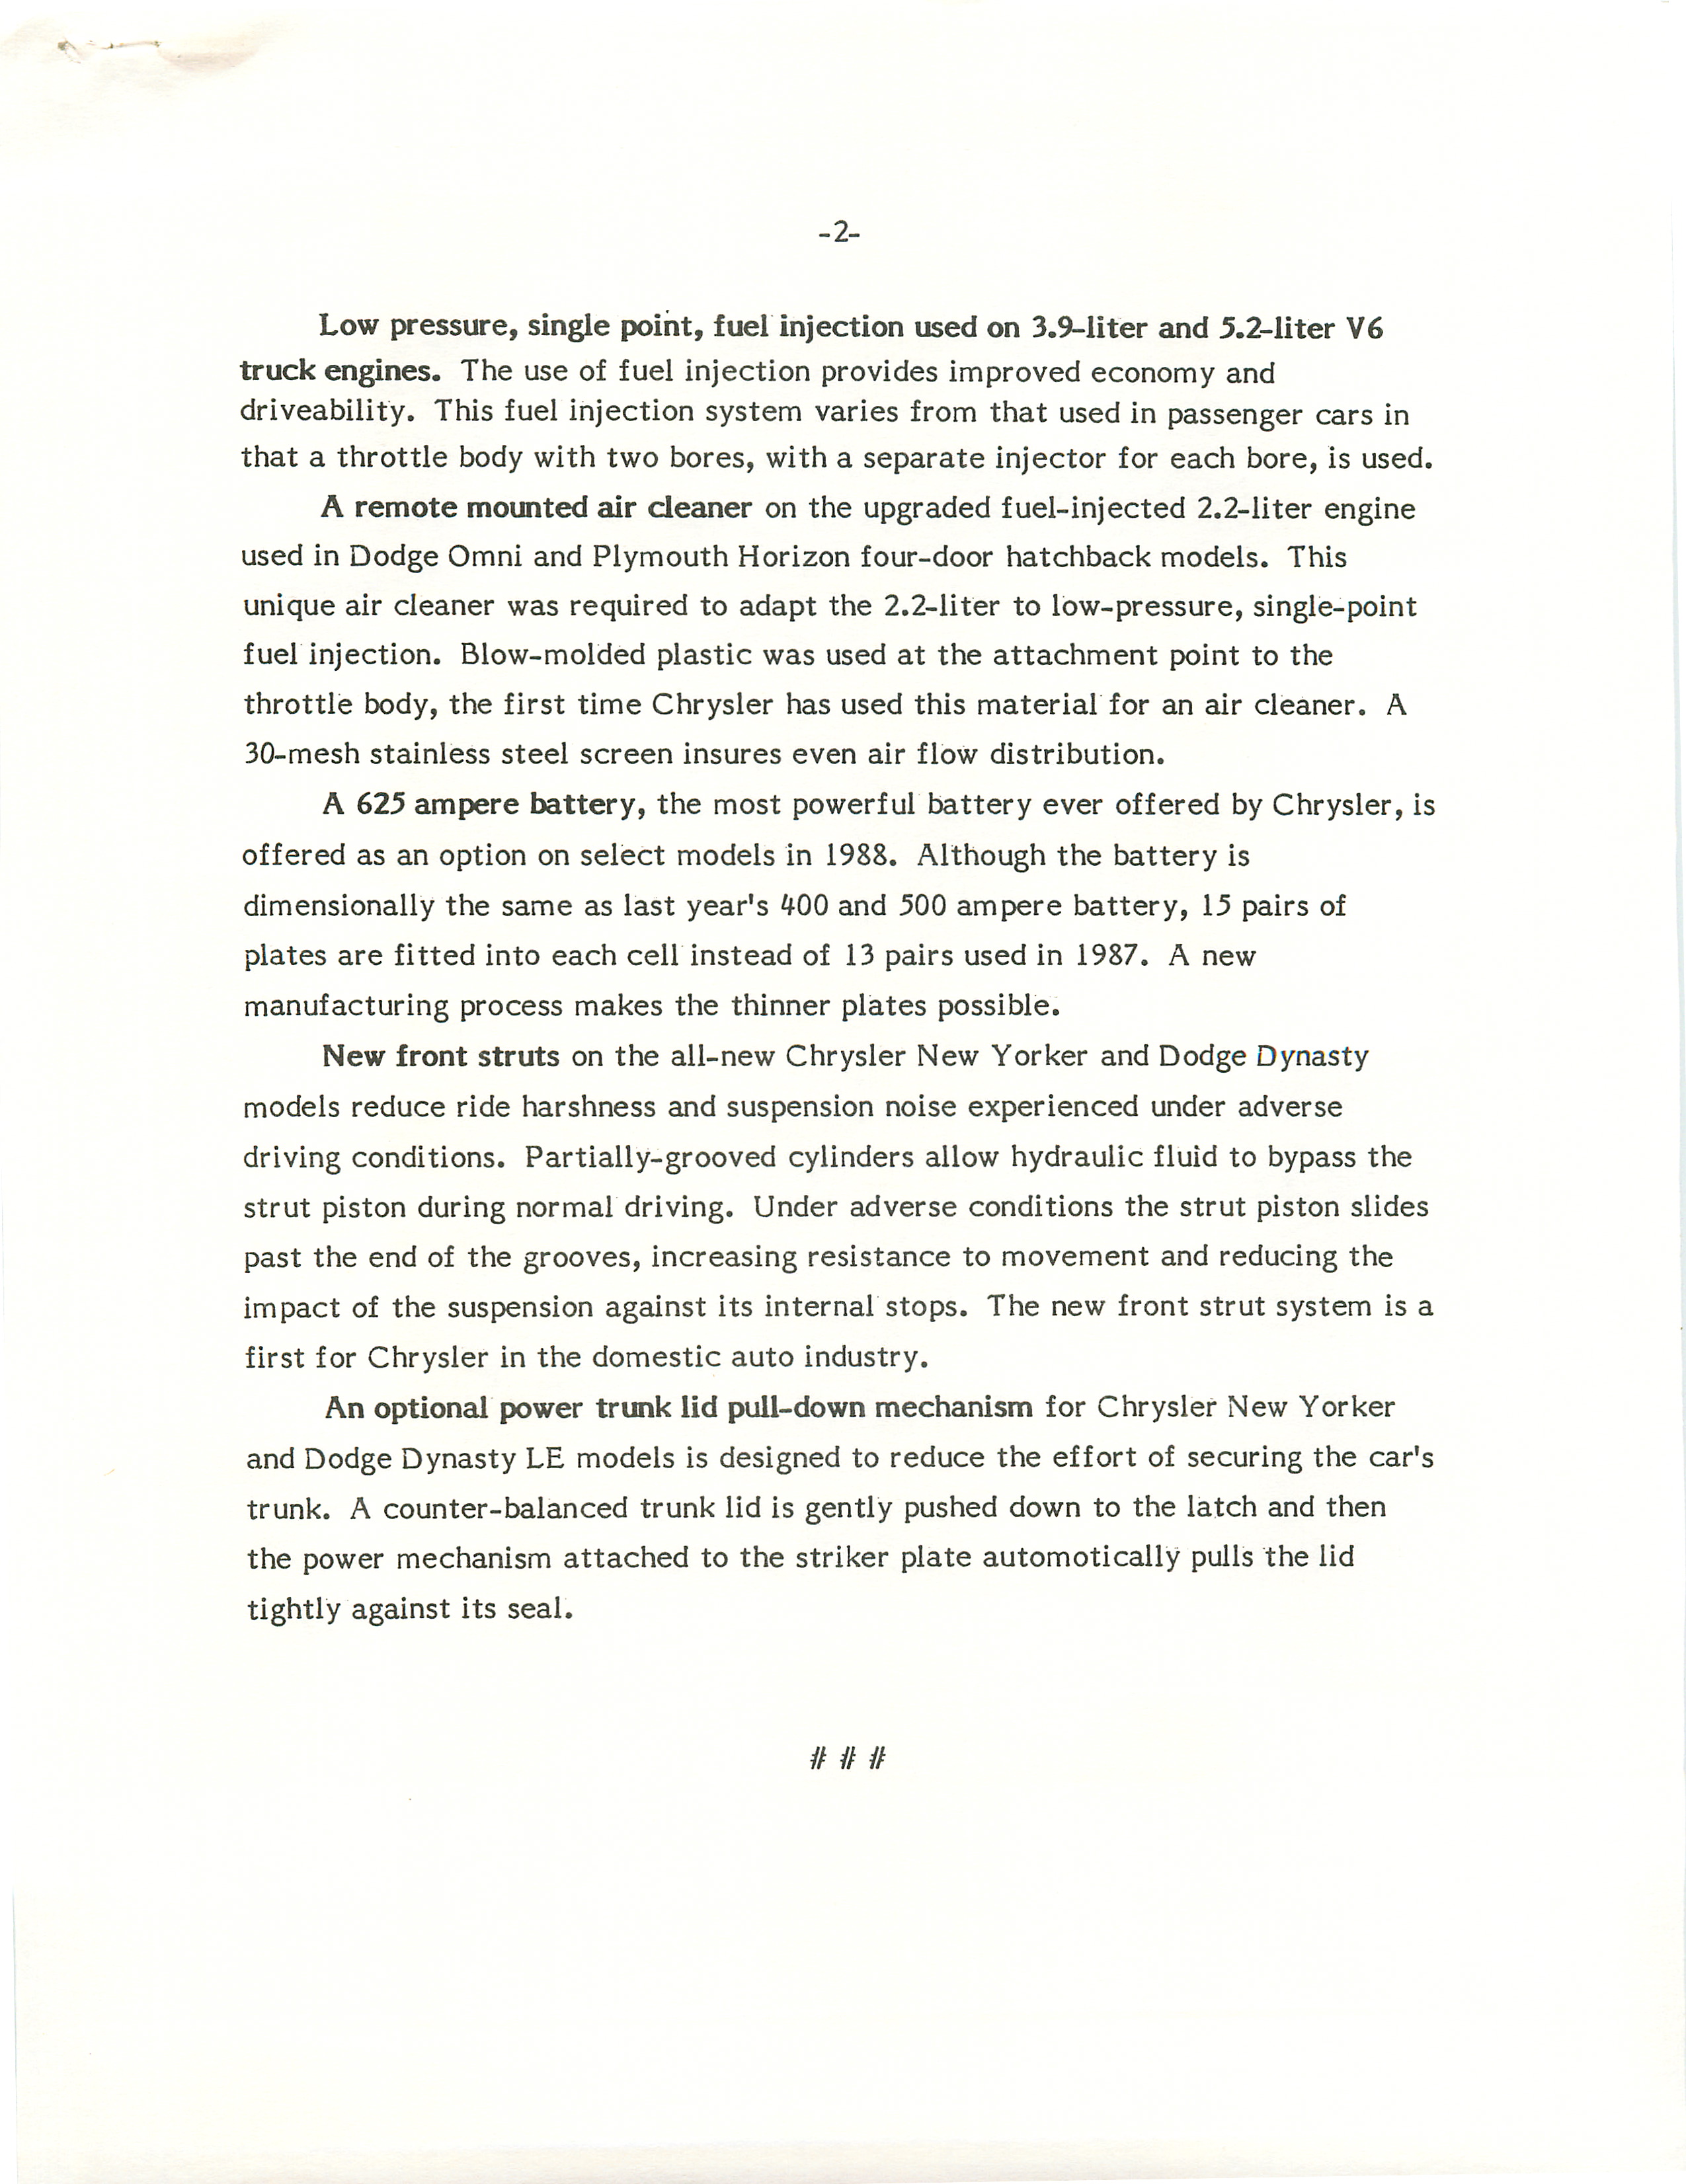 1988 Chrysler Intro Press Release-02